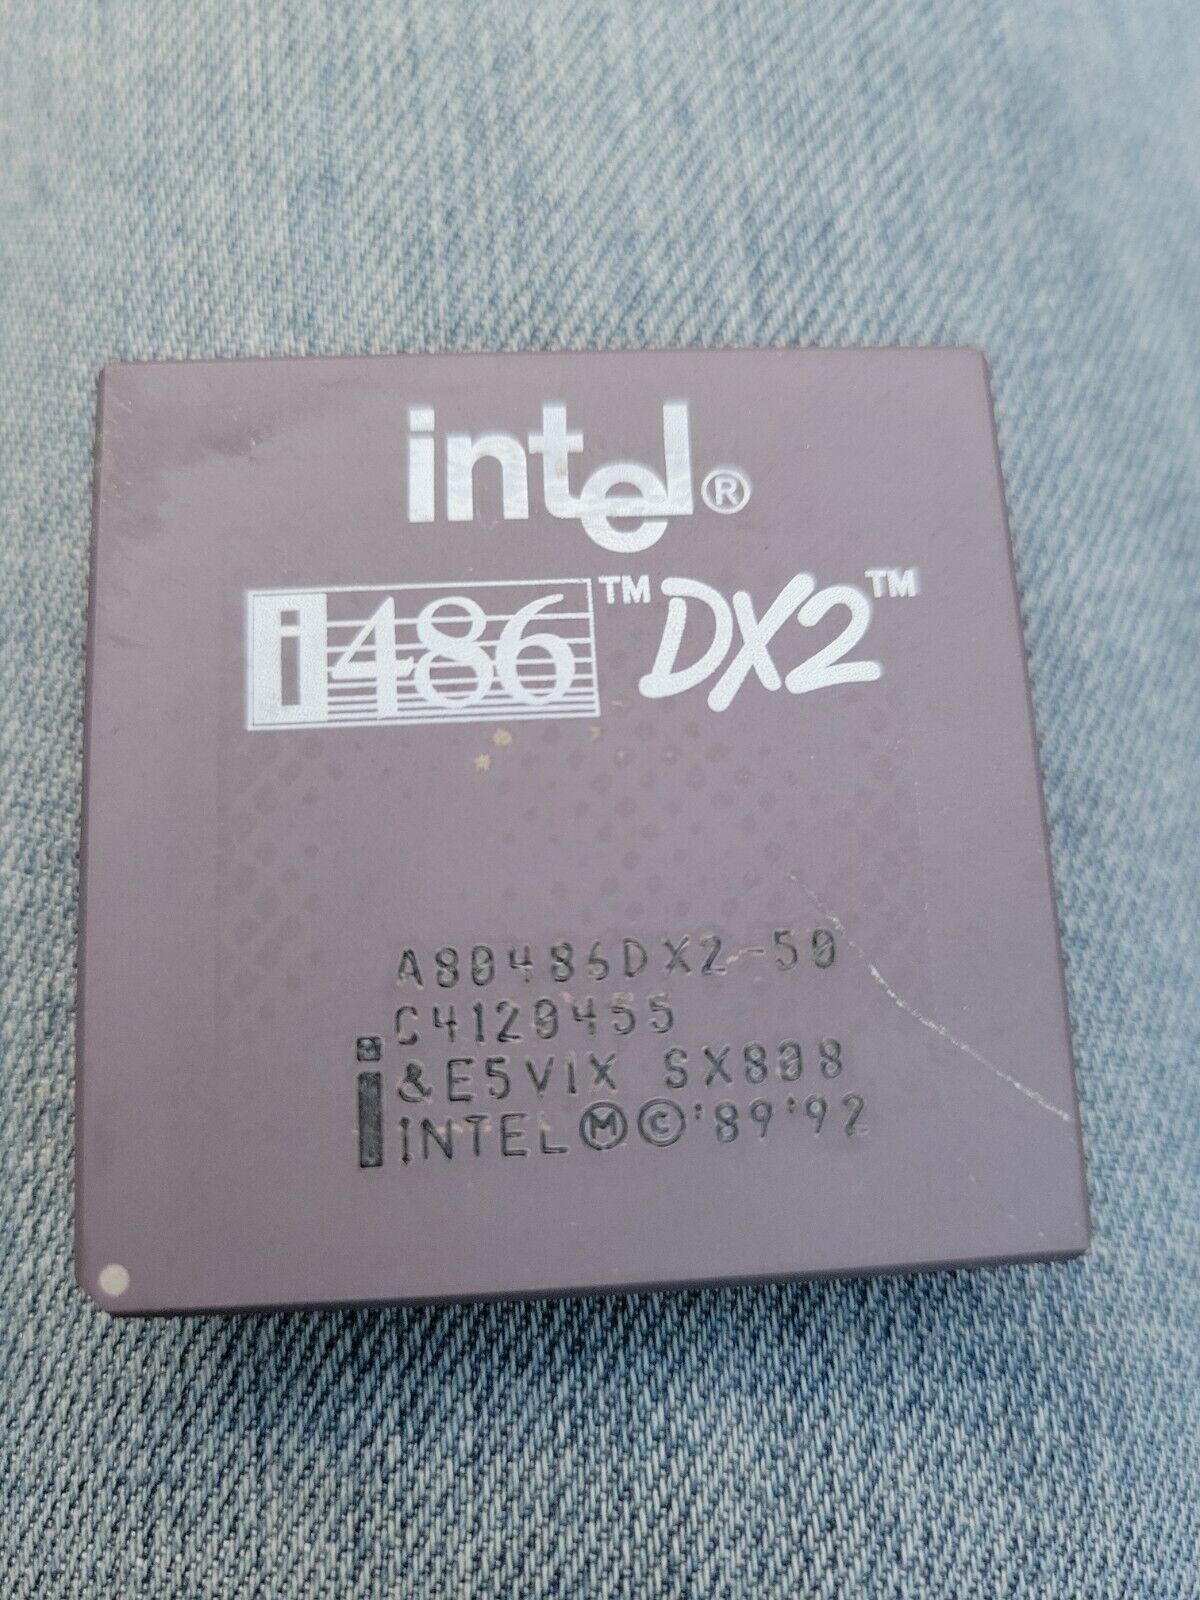 Intel 486DX2-66 A80486DX2-66 SX750 Socket 3 486DX2 66 MHz ✅Rare Collectible Gold